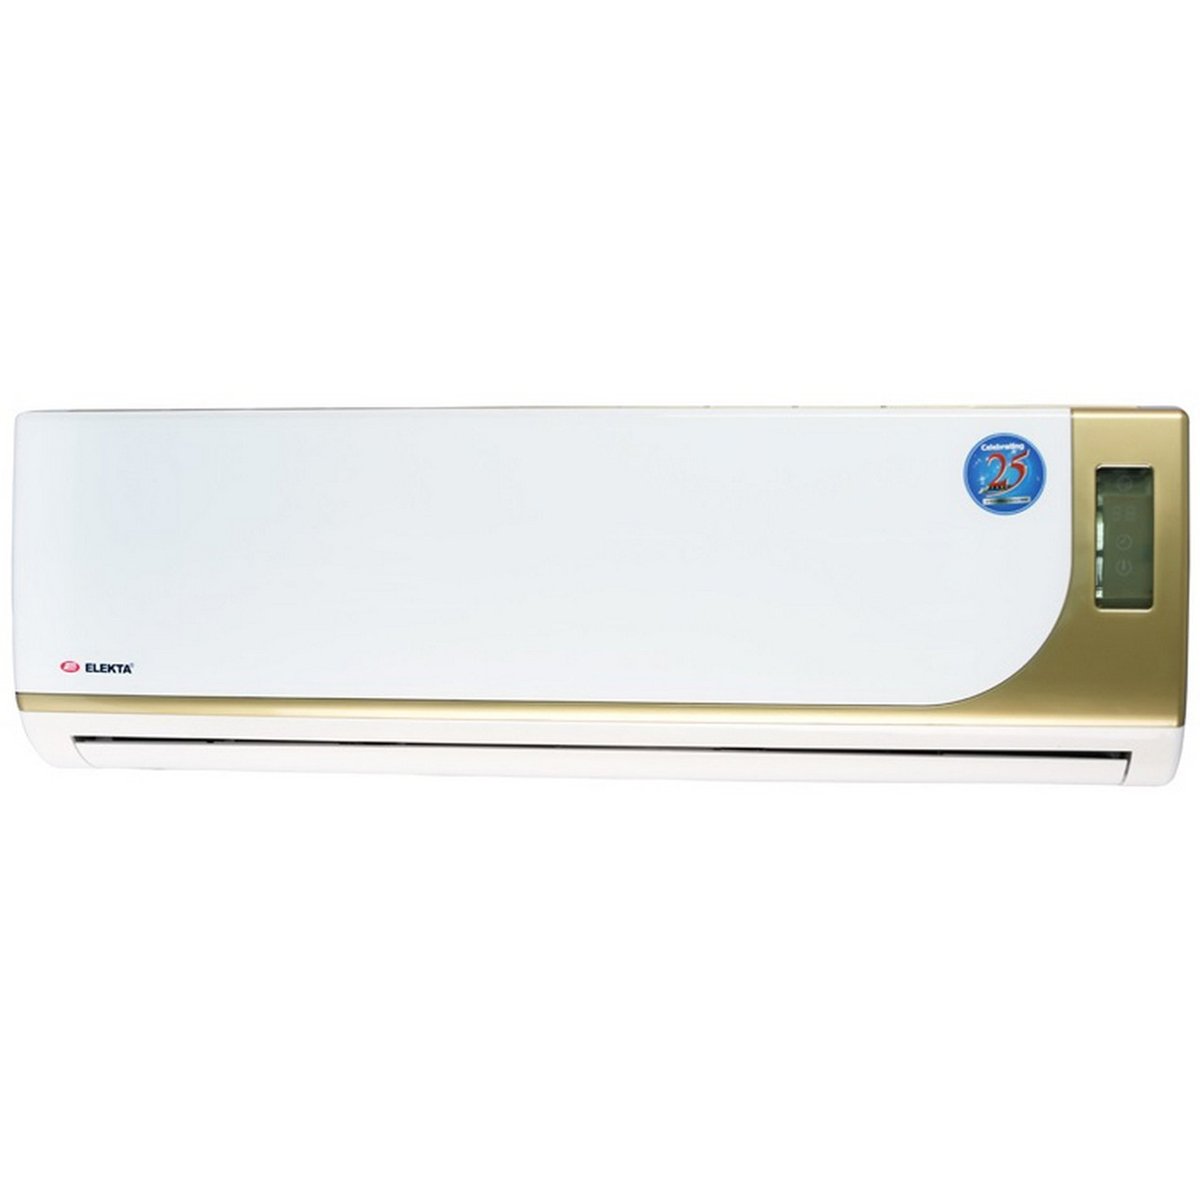 Elekta Split Air Conditioner ESAC-24001C(NR) 2Ton